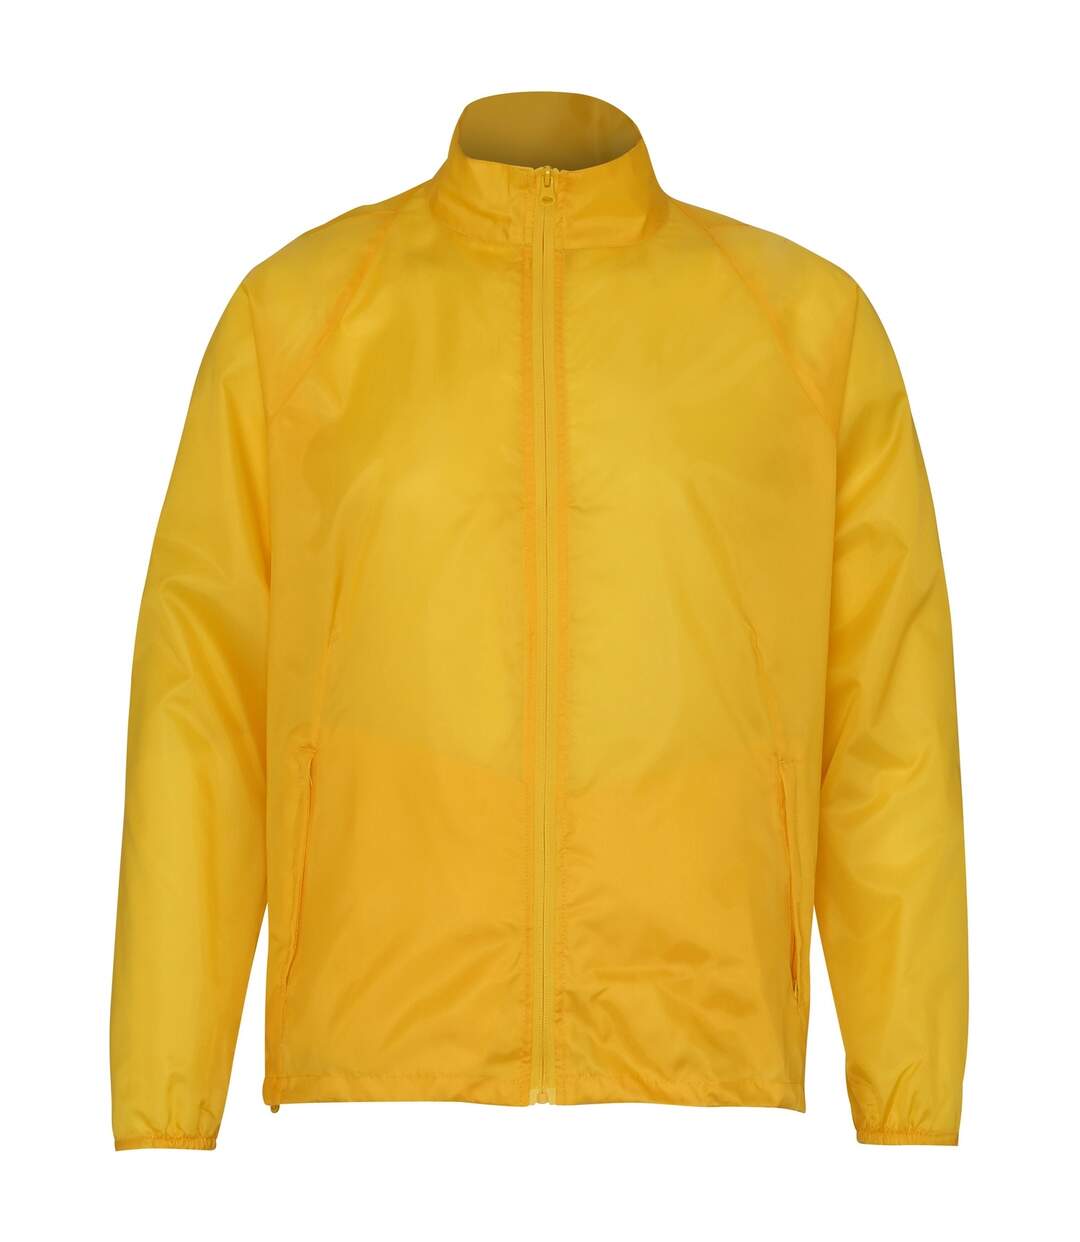 2786 Unisex Lightweight Plain Wind & Shower Resistant Jacket (Amber)